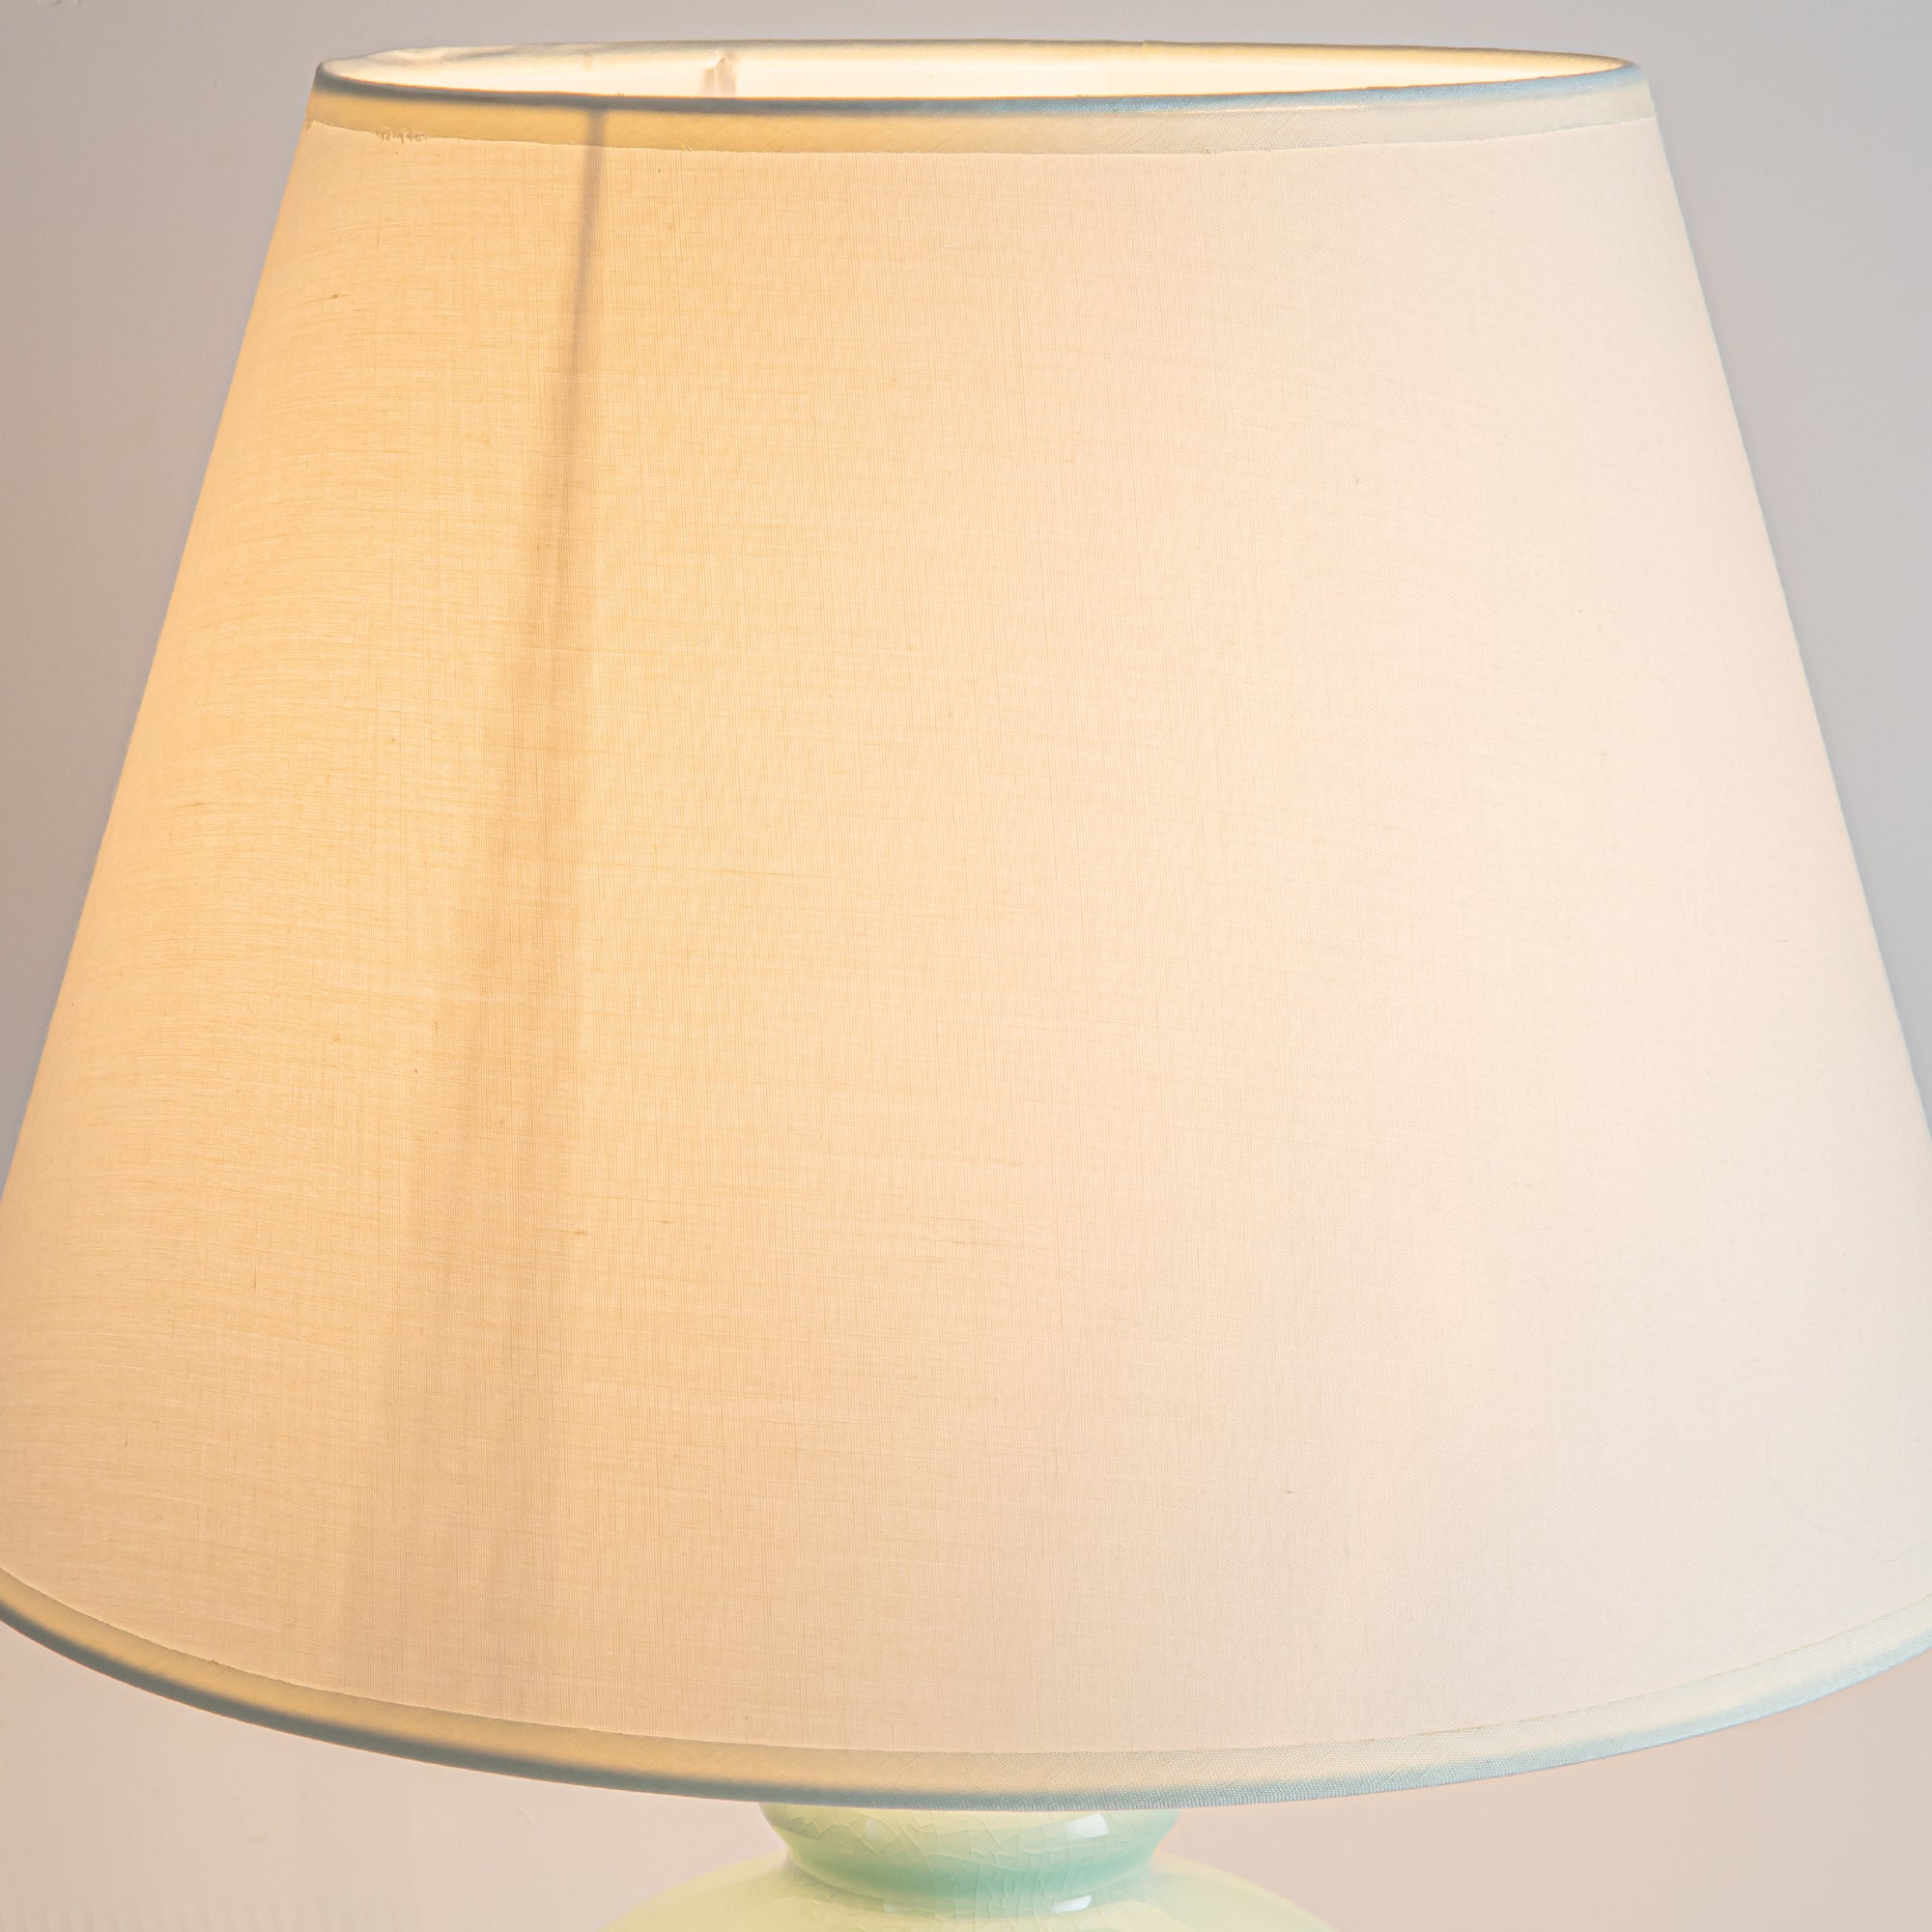 Brookside Ceramic Table Lamp